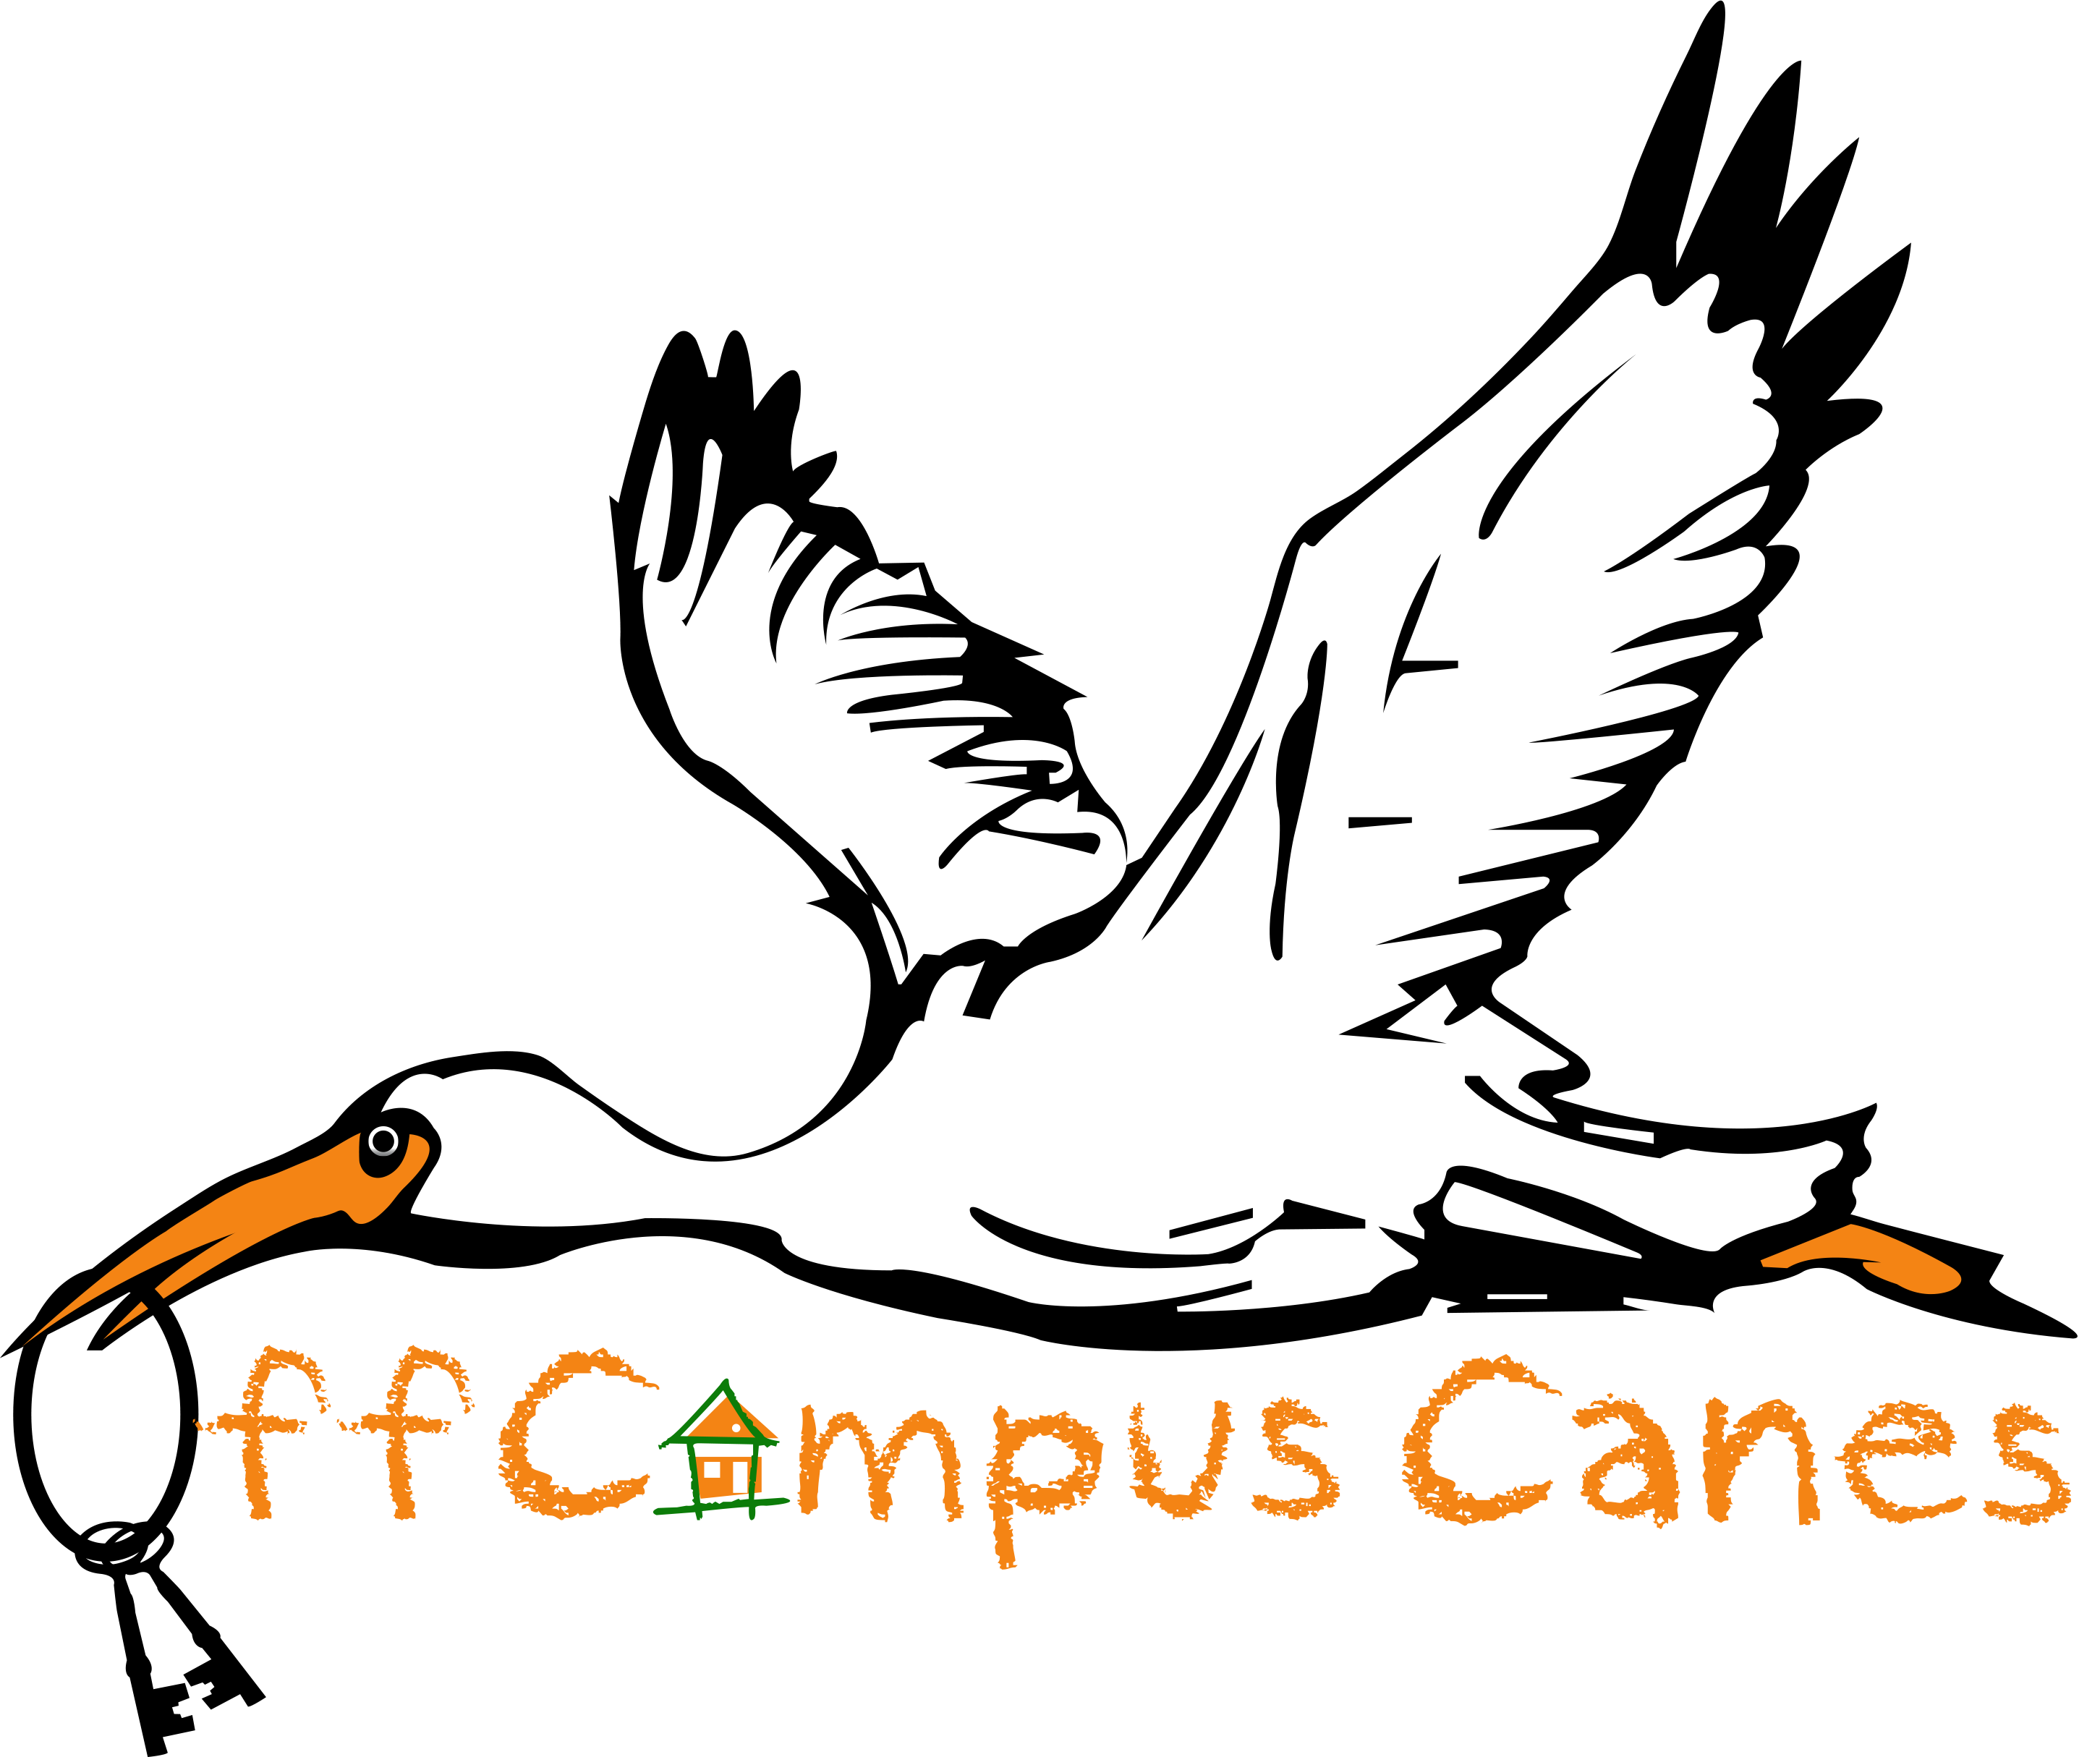 Off Campus Canes logo